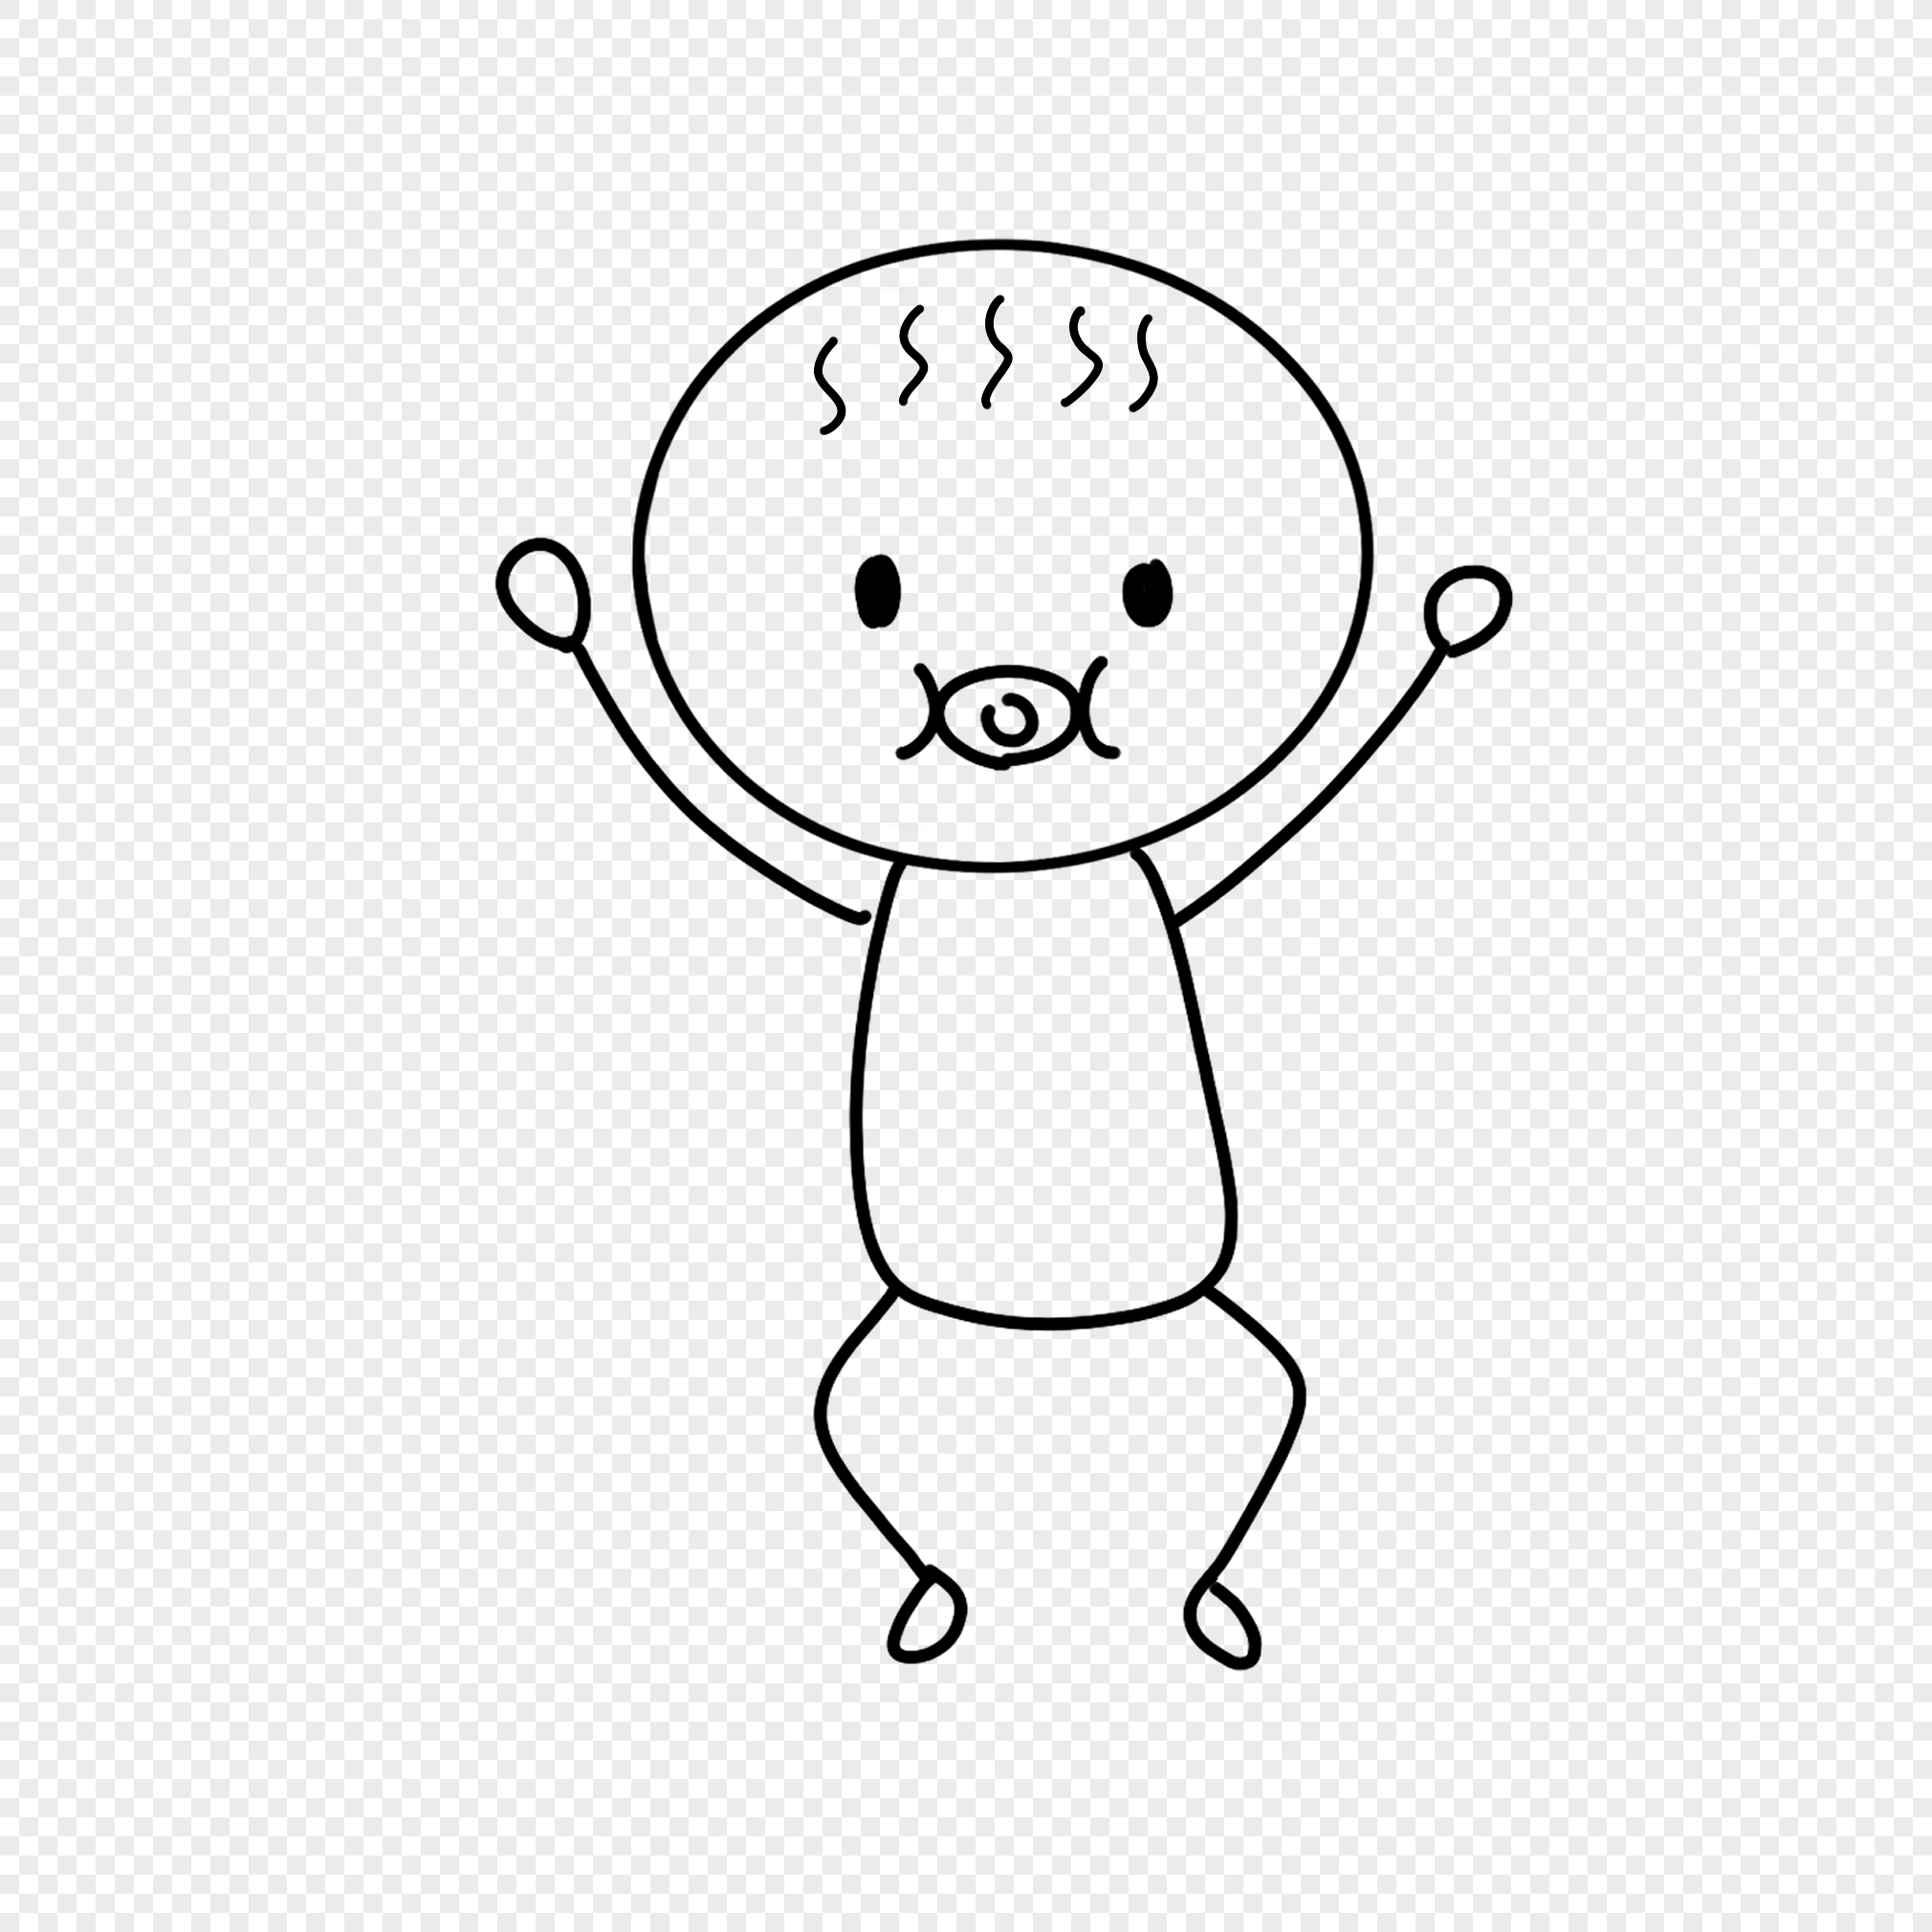 Stick Figure Expression Pack PNG Imagens Gratuitas Para Download - Lovepik